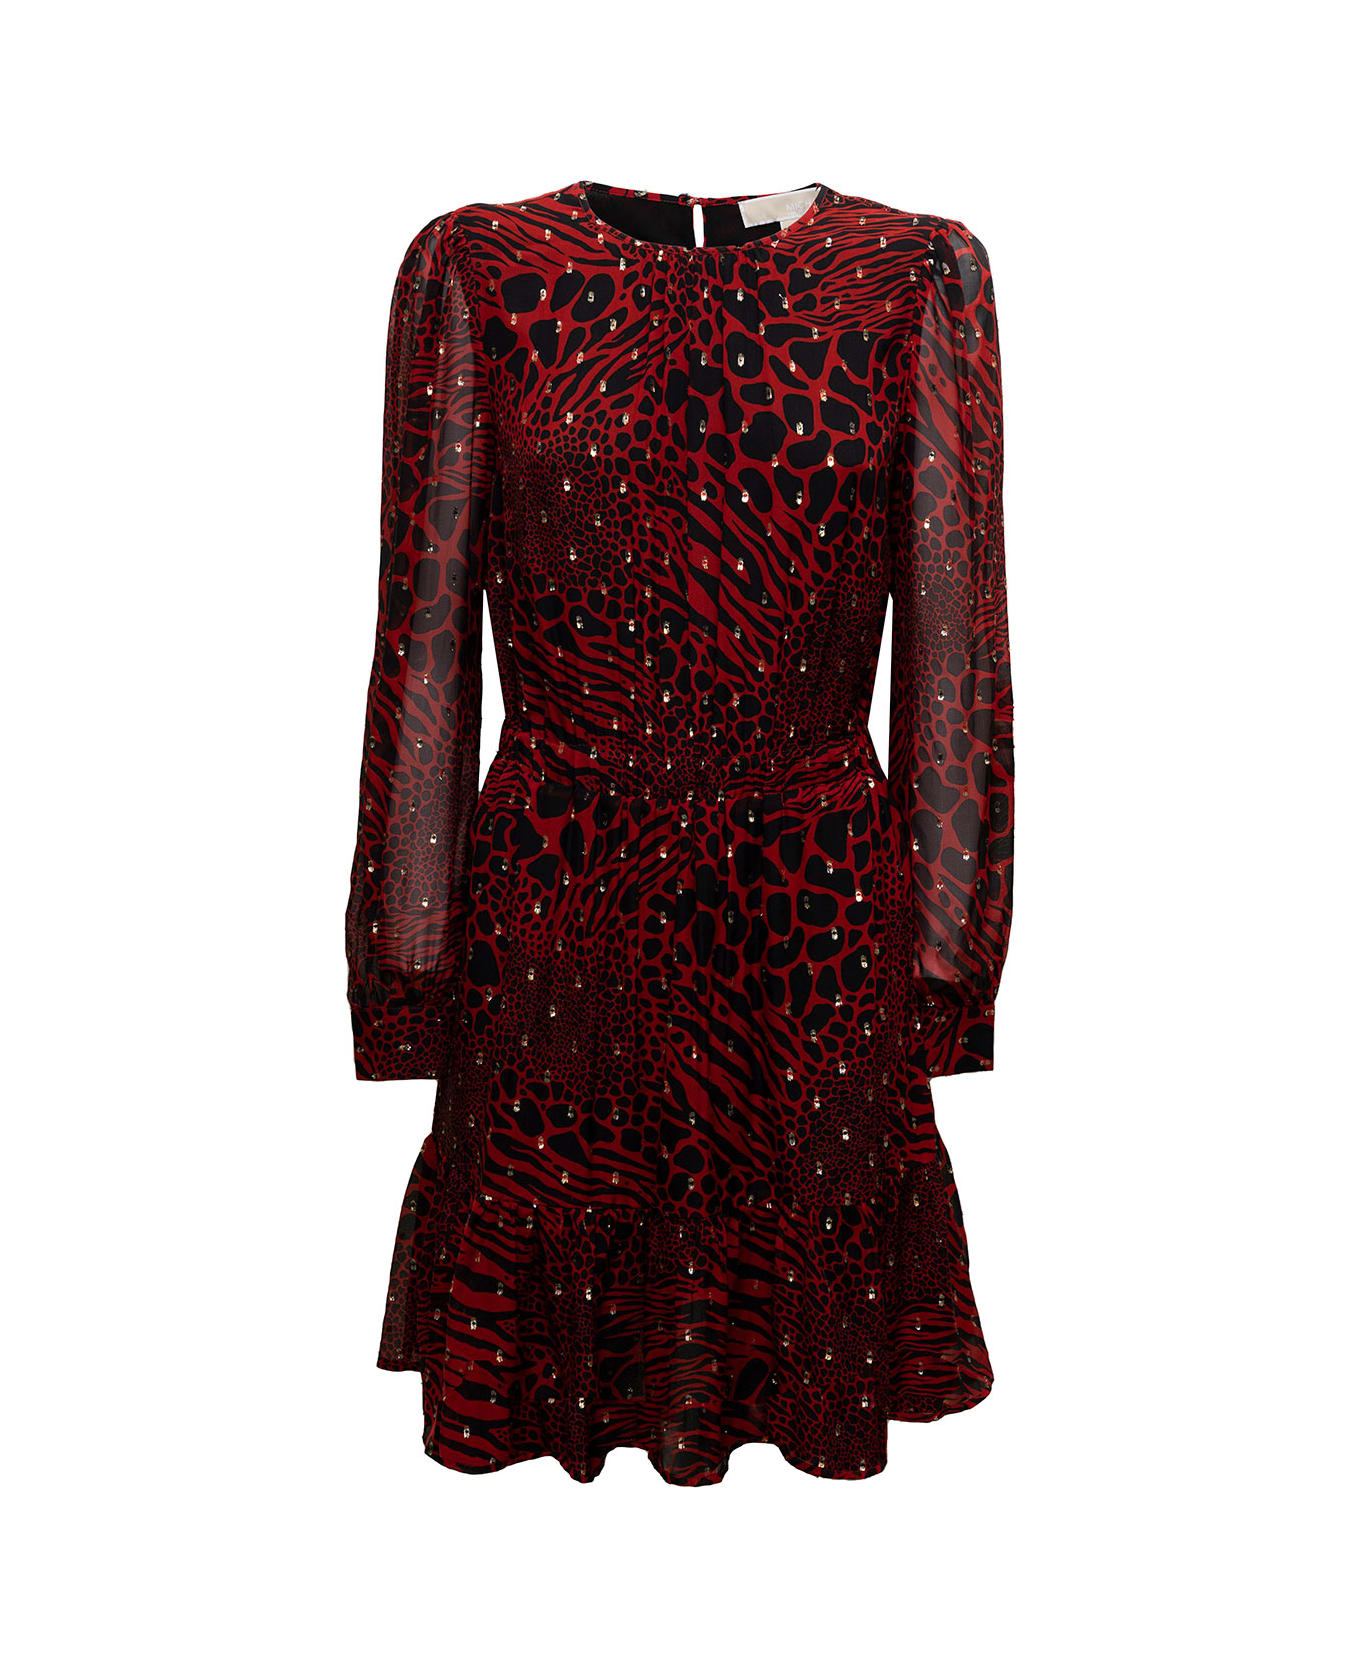 MICHAEL Michael Kors Animalier Red Dress With Metallic Polka Dots Details M Michael Kors Woman - Red